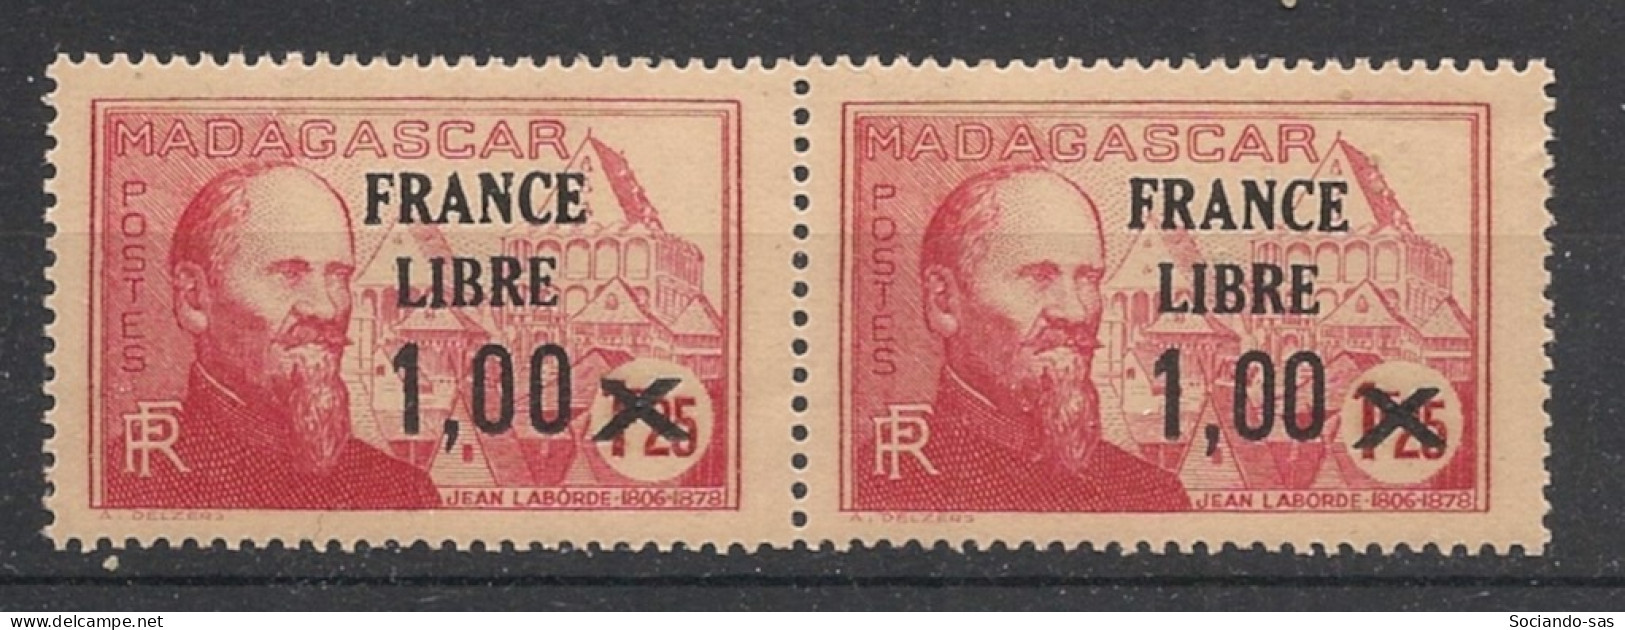 MADAGASCAR - 1942 - N°YT. 260b - France Libre 1,00 Sur 1f25 - VARIETE Surcharge Espacée T.a.n. - Neuf Luxe ** / MNH - Ungebraucht